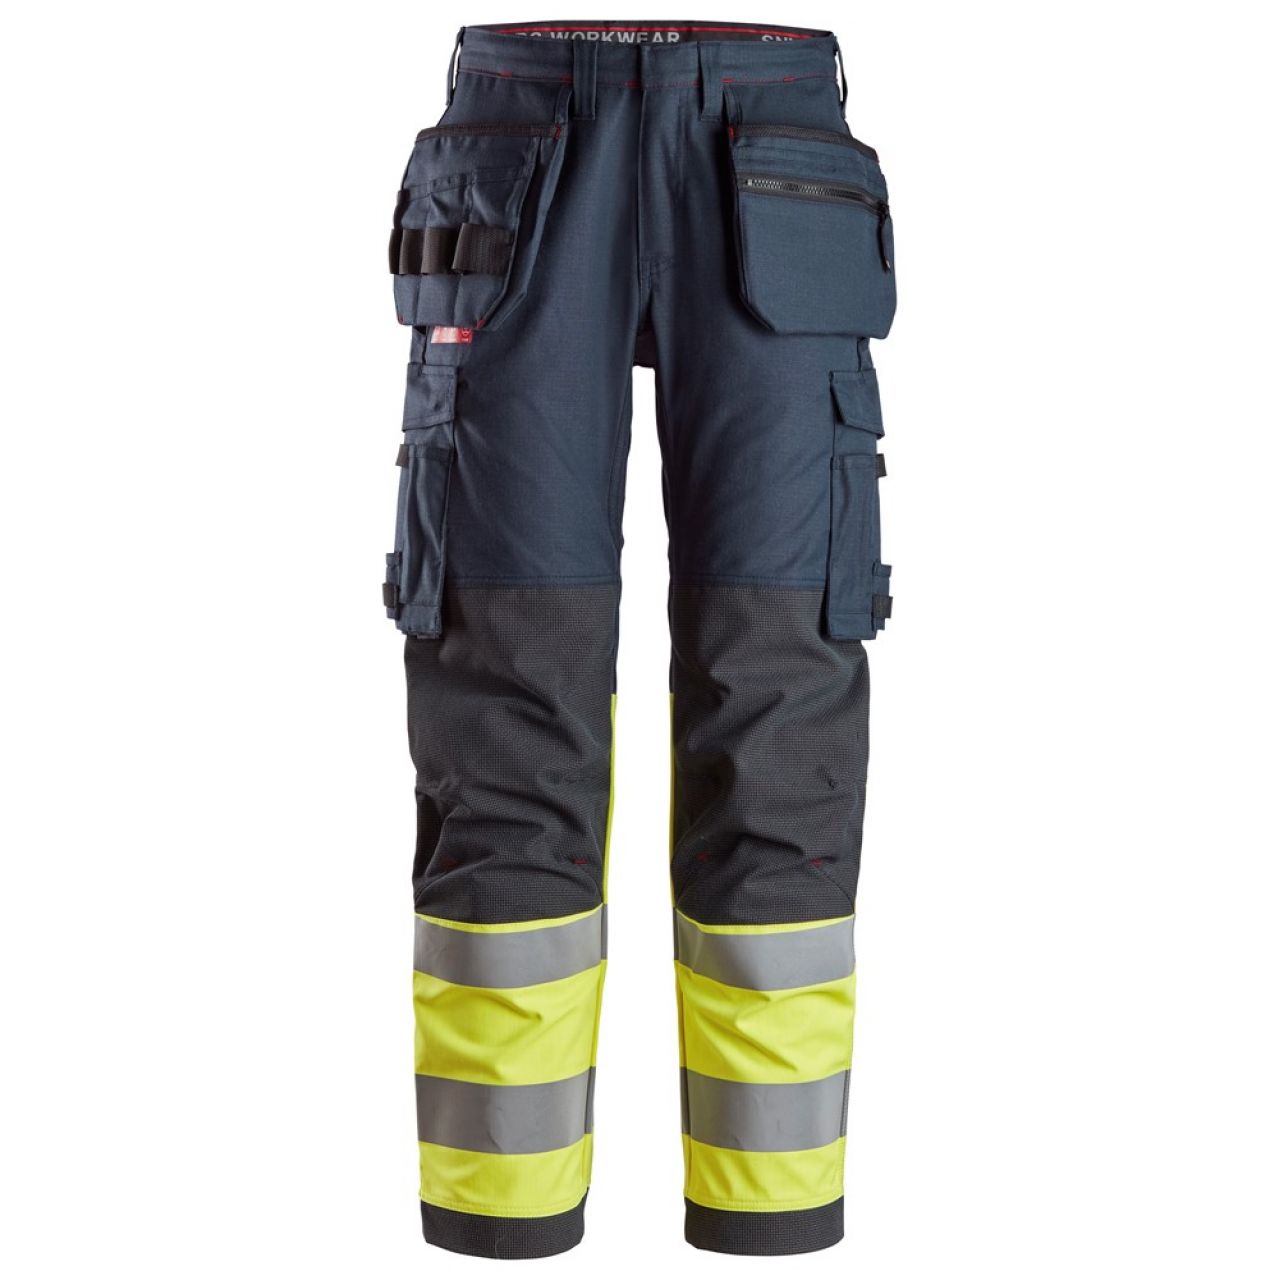 6263 Pantalones largos de trabajo de alta visibilidad clase 1 con bolsillos flotantes ProtecWork azul marino-amarillo talla 88